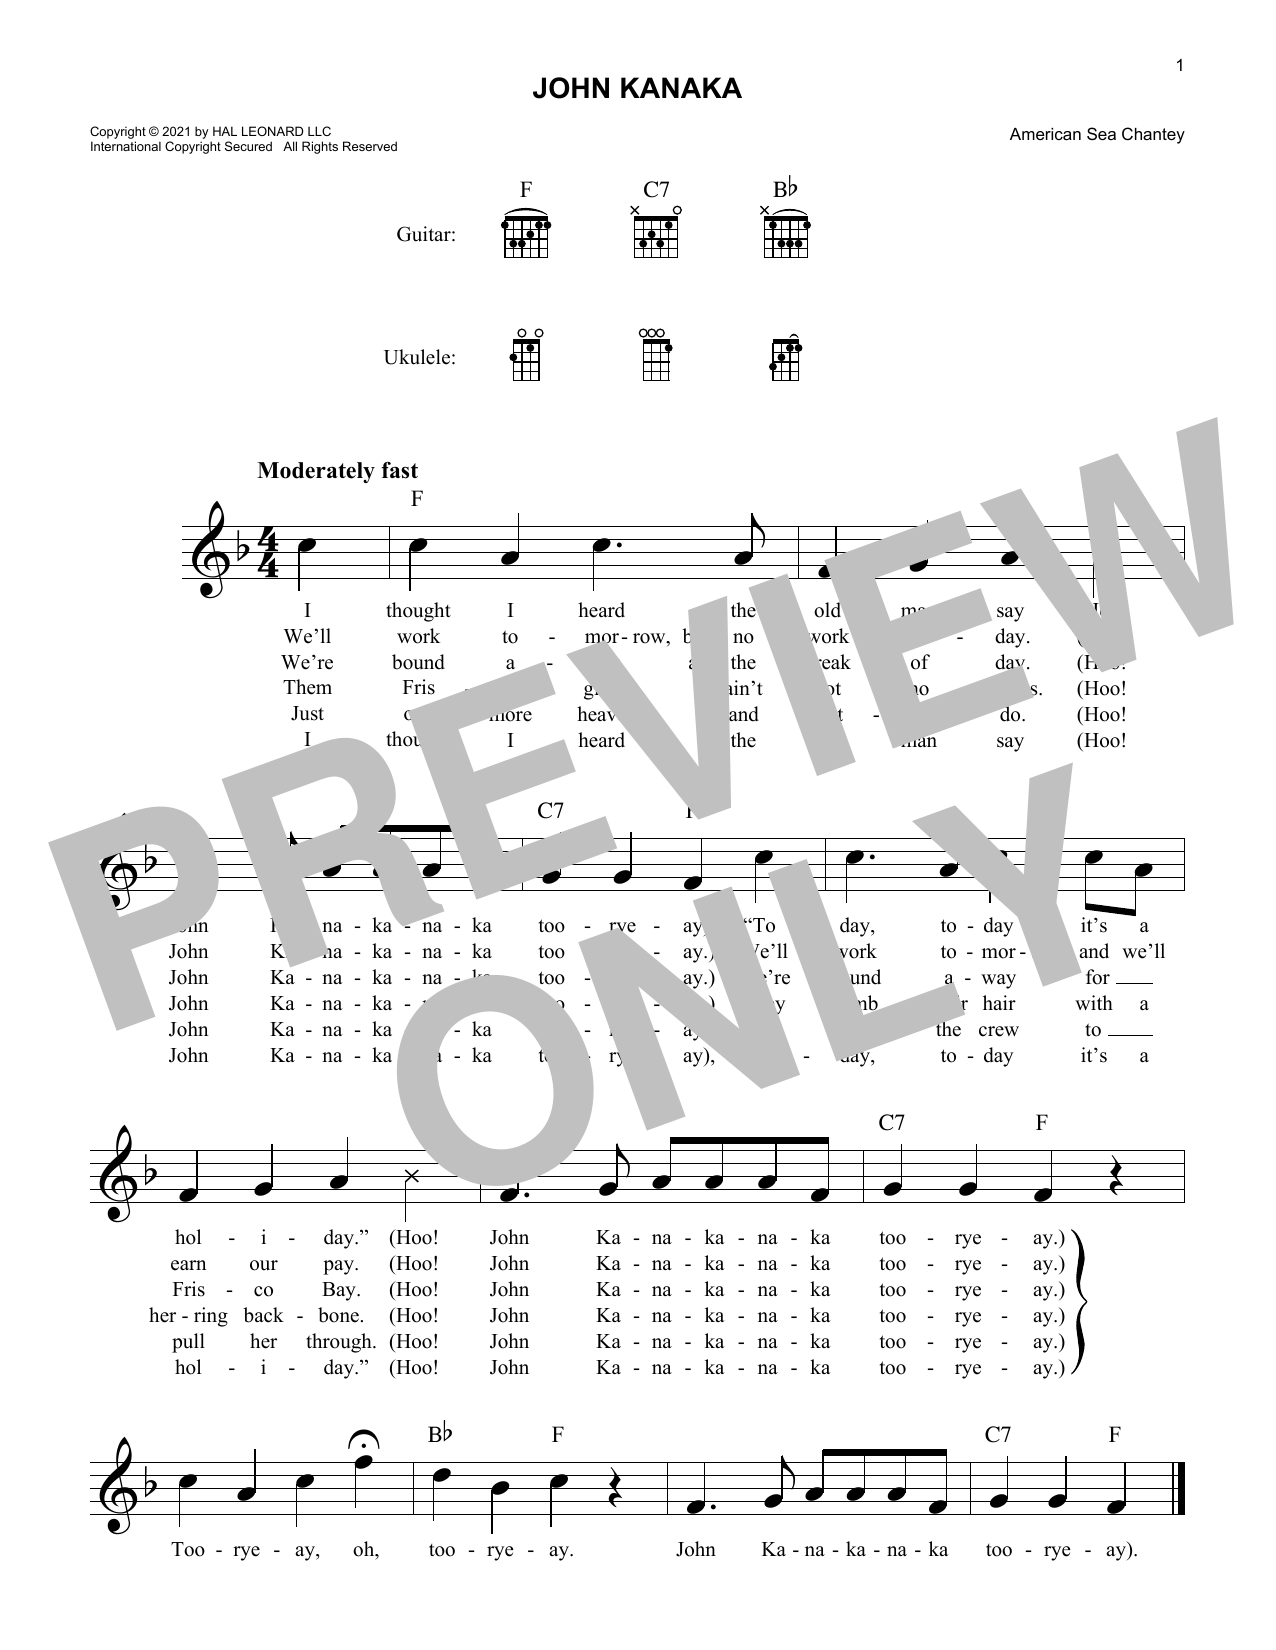 Download American Sea Chantey John Kanaka Sheet Music and learn how to play Lead Sheet / Fake Book PDF digital score in minutes